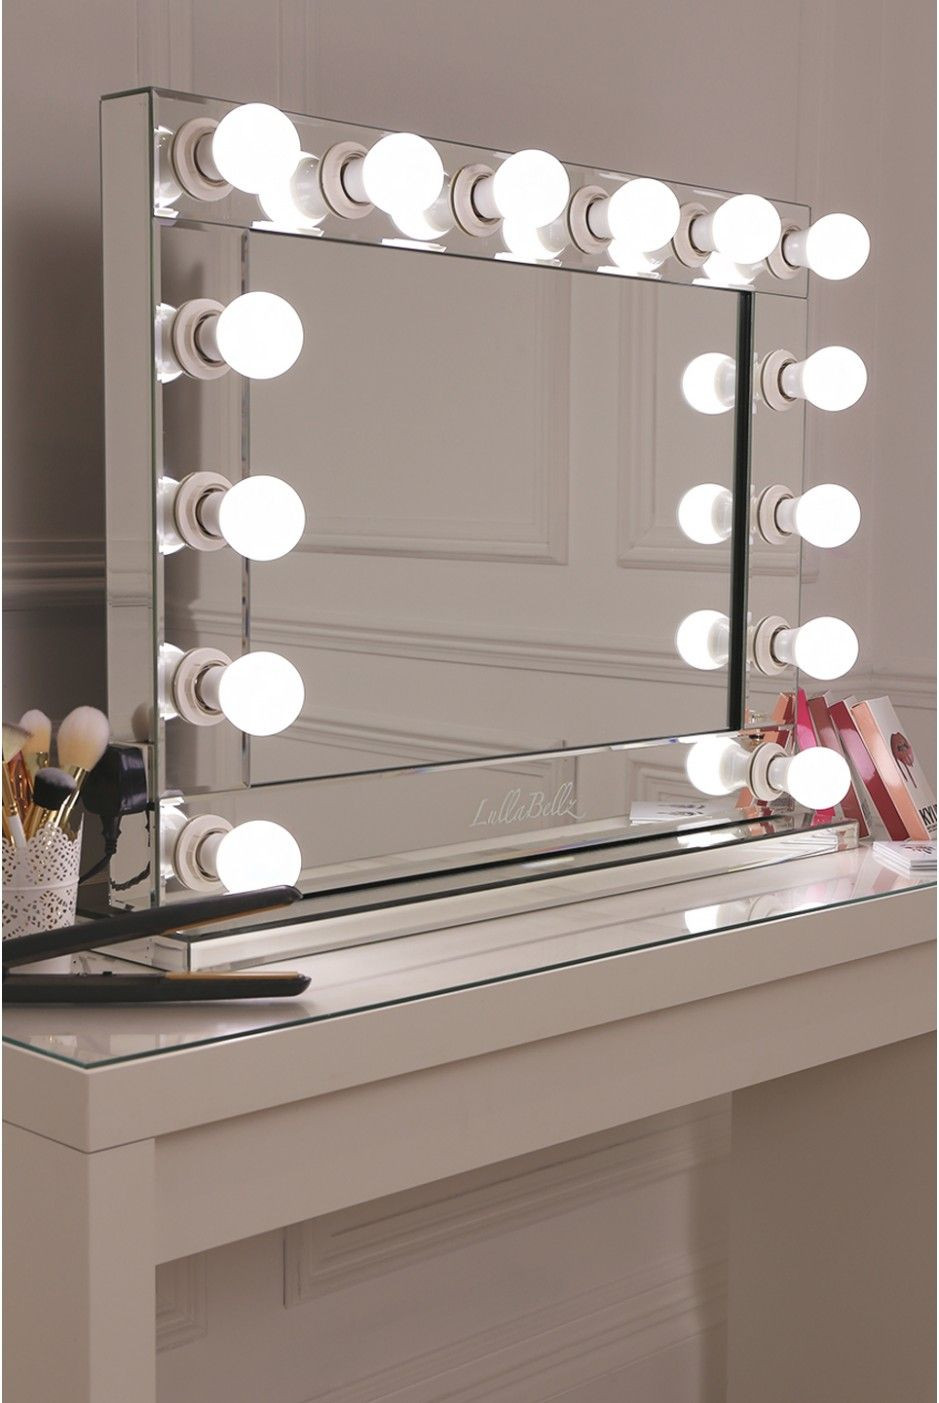 Hollywood Vanity Mirror DIY
 DIY Vanity Mirror With Lights for Bathroom and Makeup